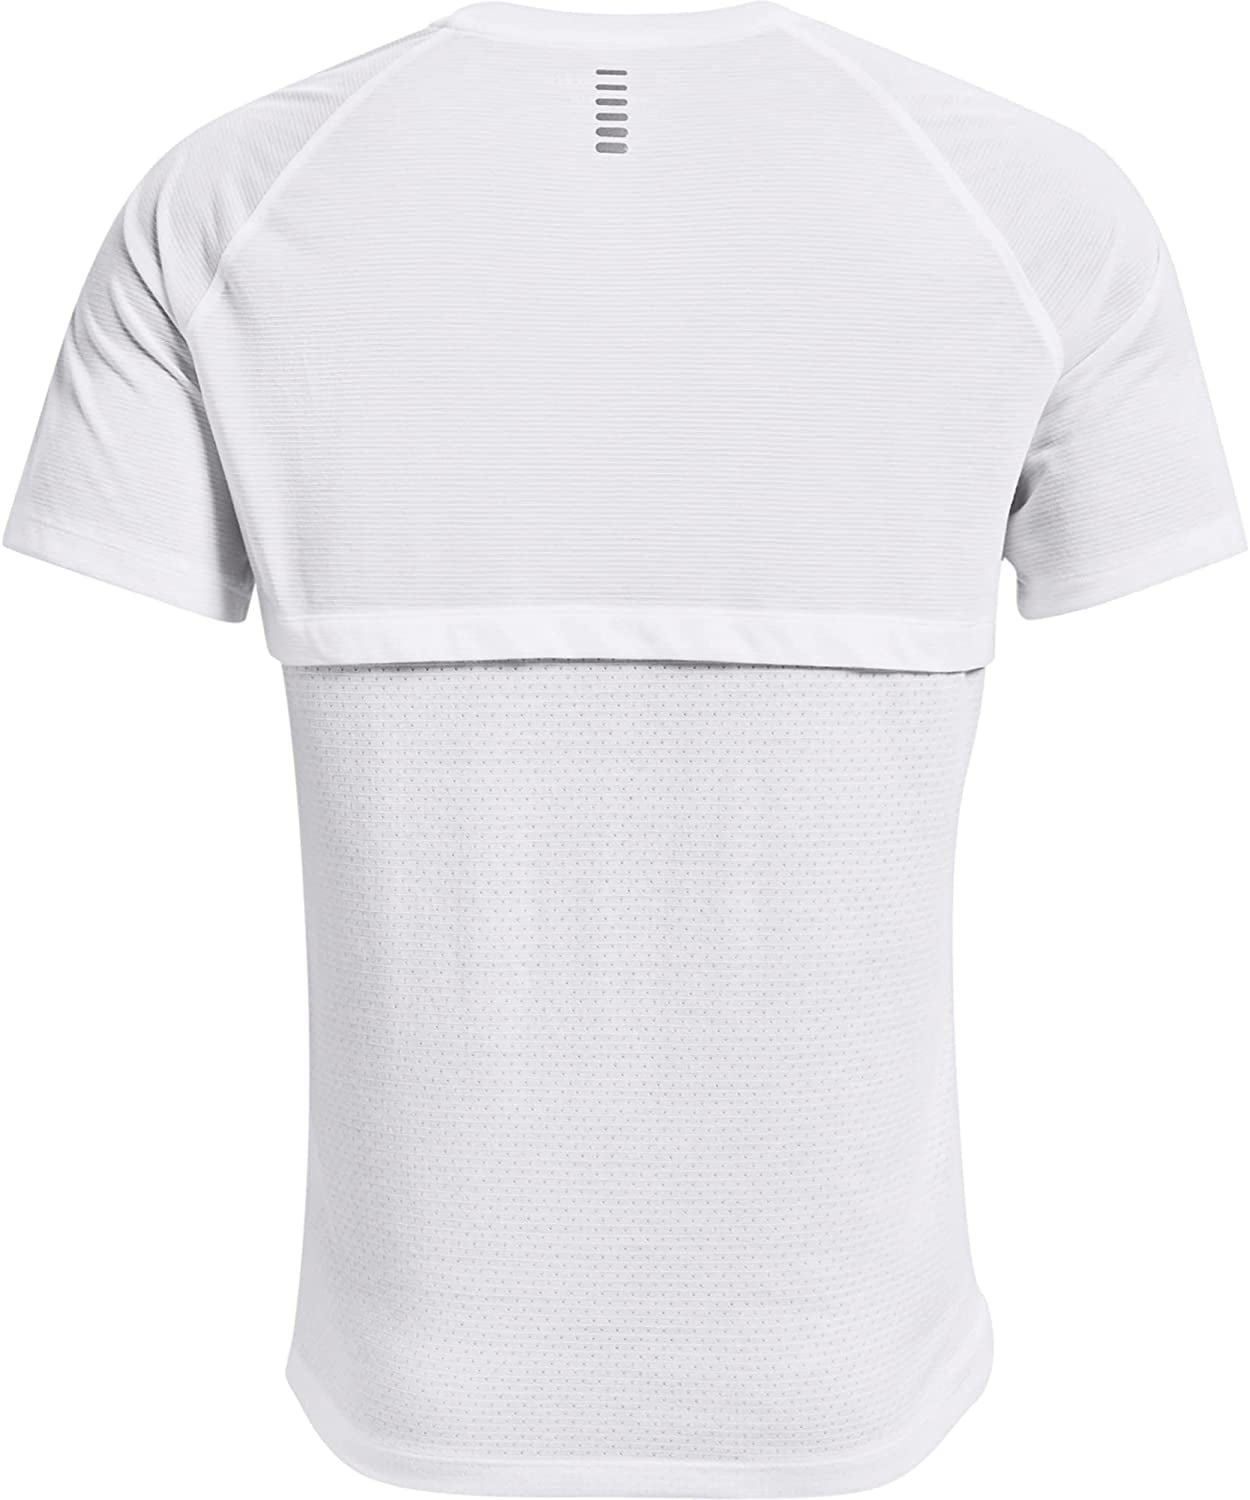 Under Armour Mens Streaker Large Short-Sleeve 100/Reflective T-Shirt White